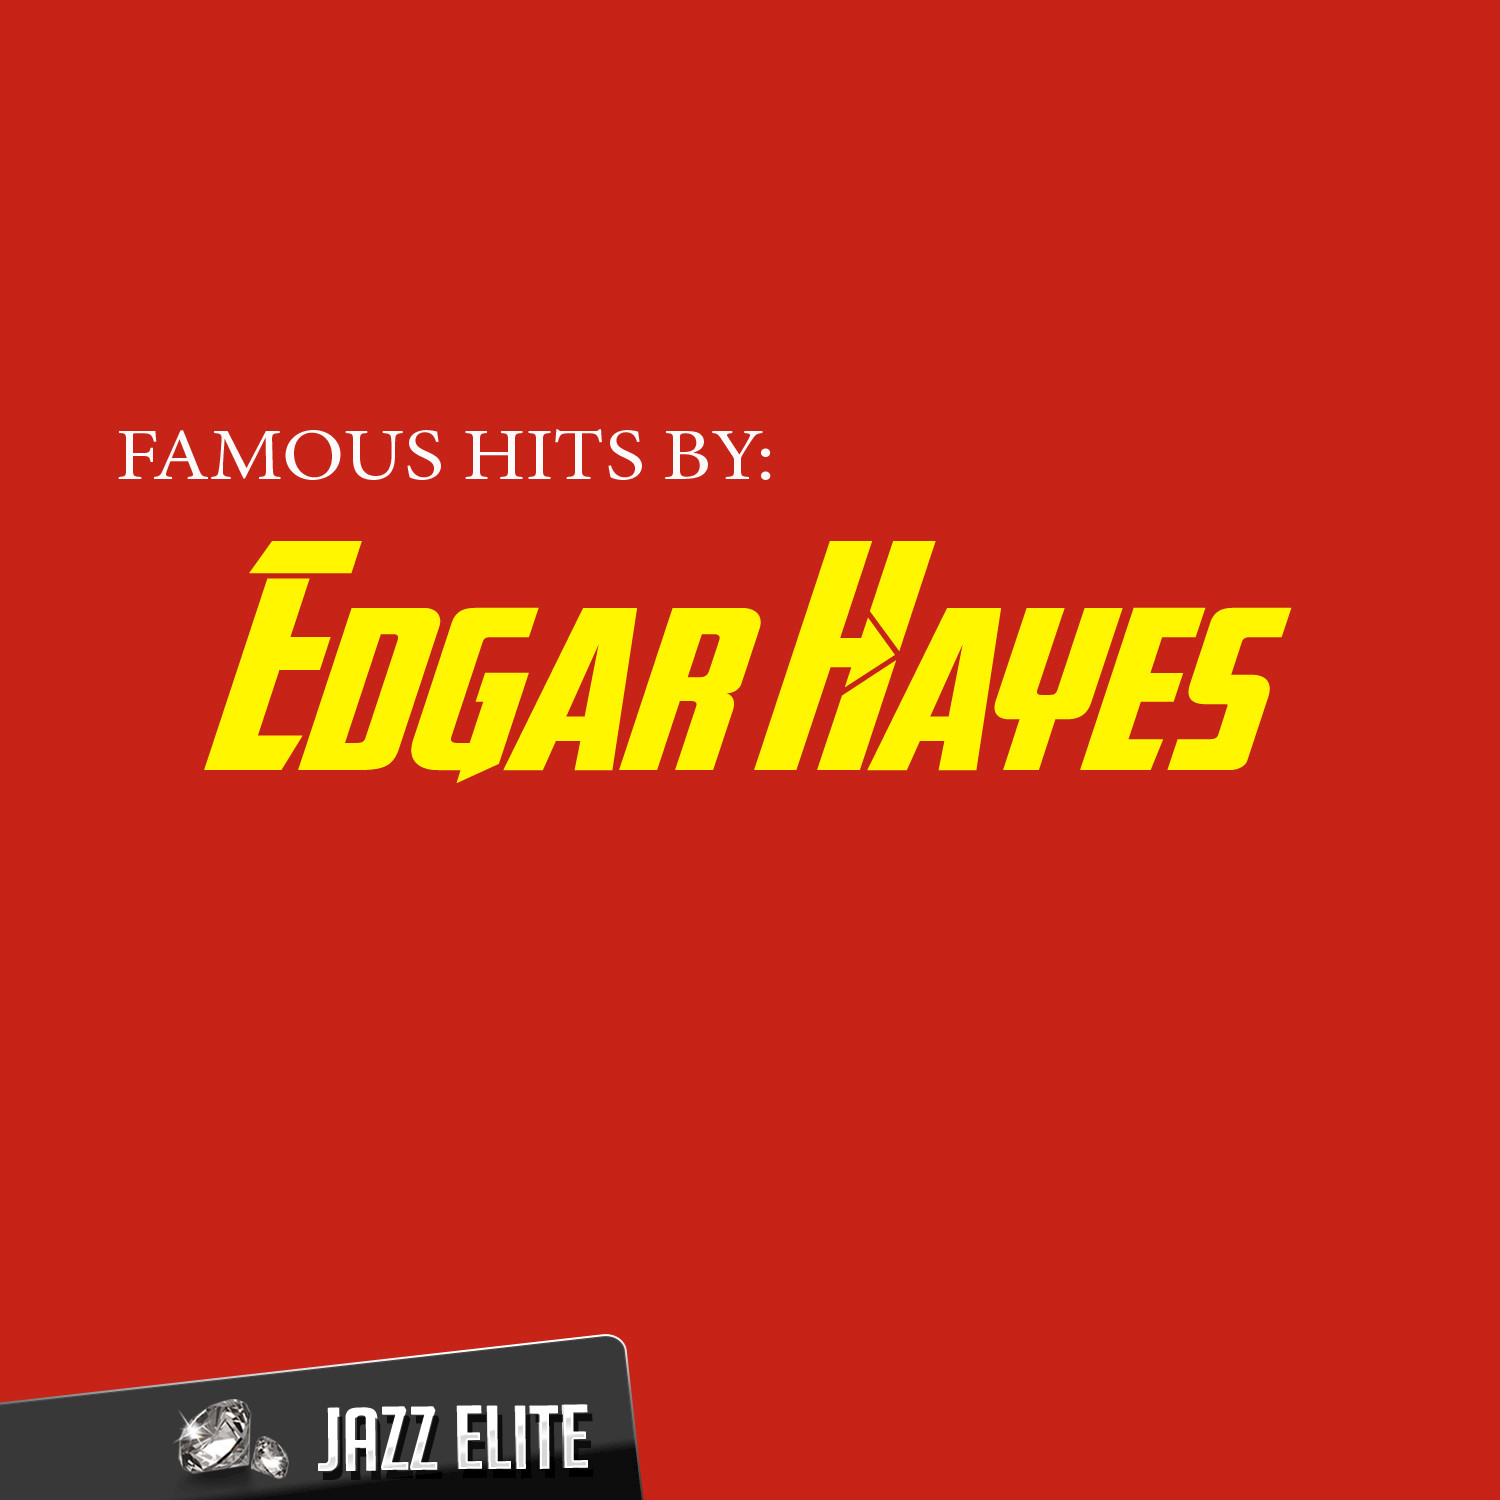 Edgar's Boogie